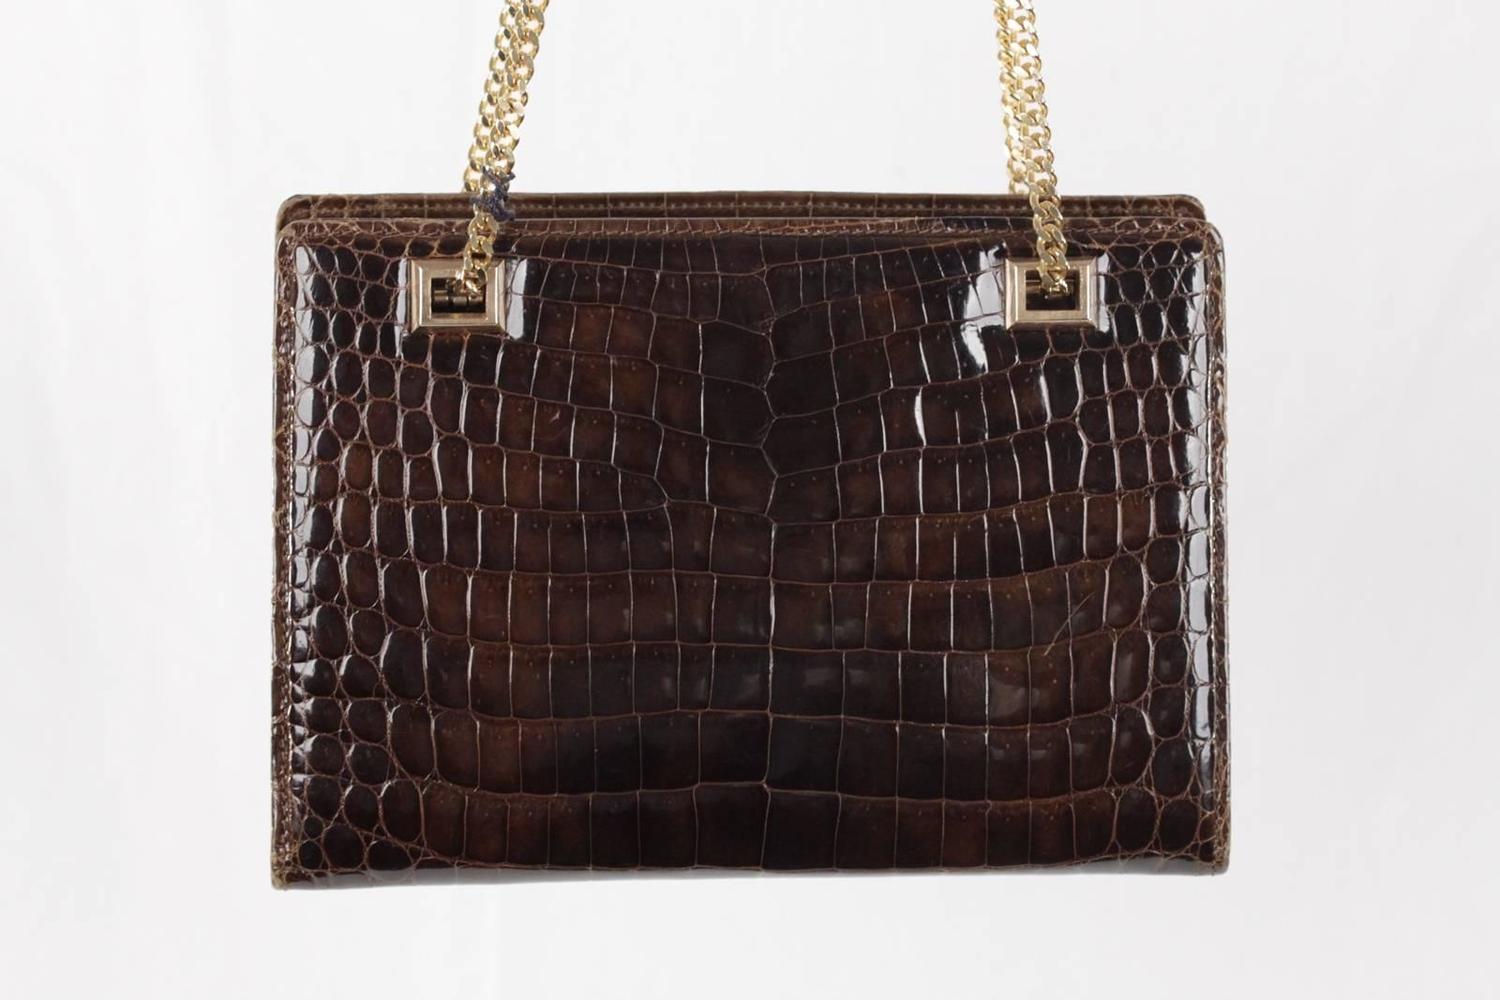 GUCCI VINTAGE Brown CROCODILE Leather SHOULDER BAG w/ Chain Straps For Sale at 1stdibs